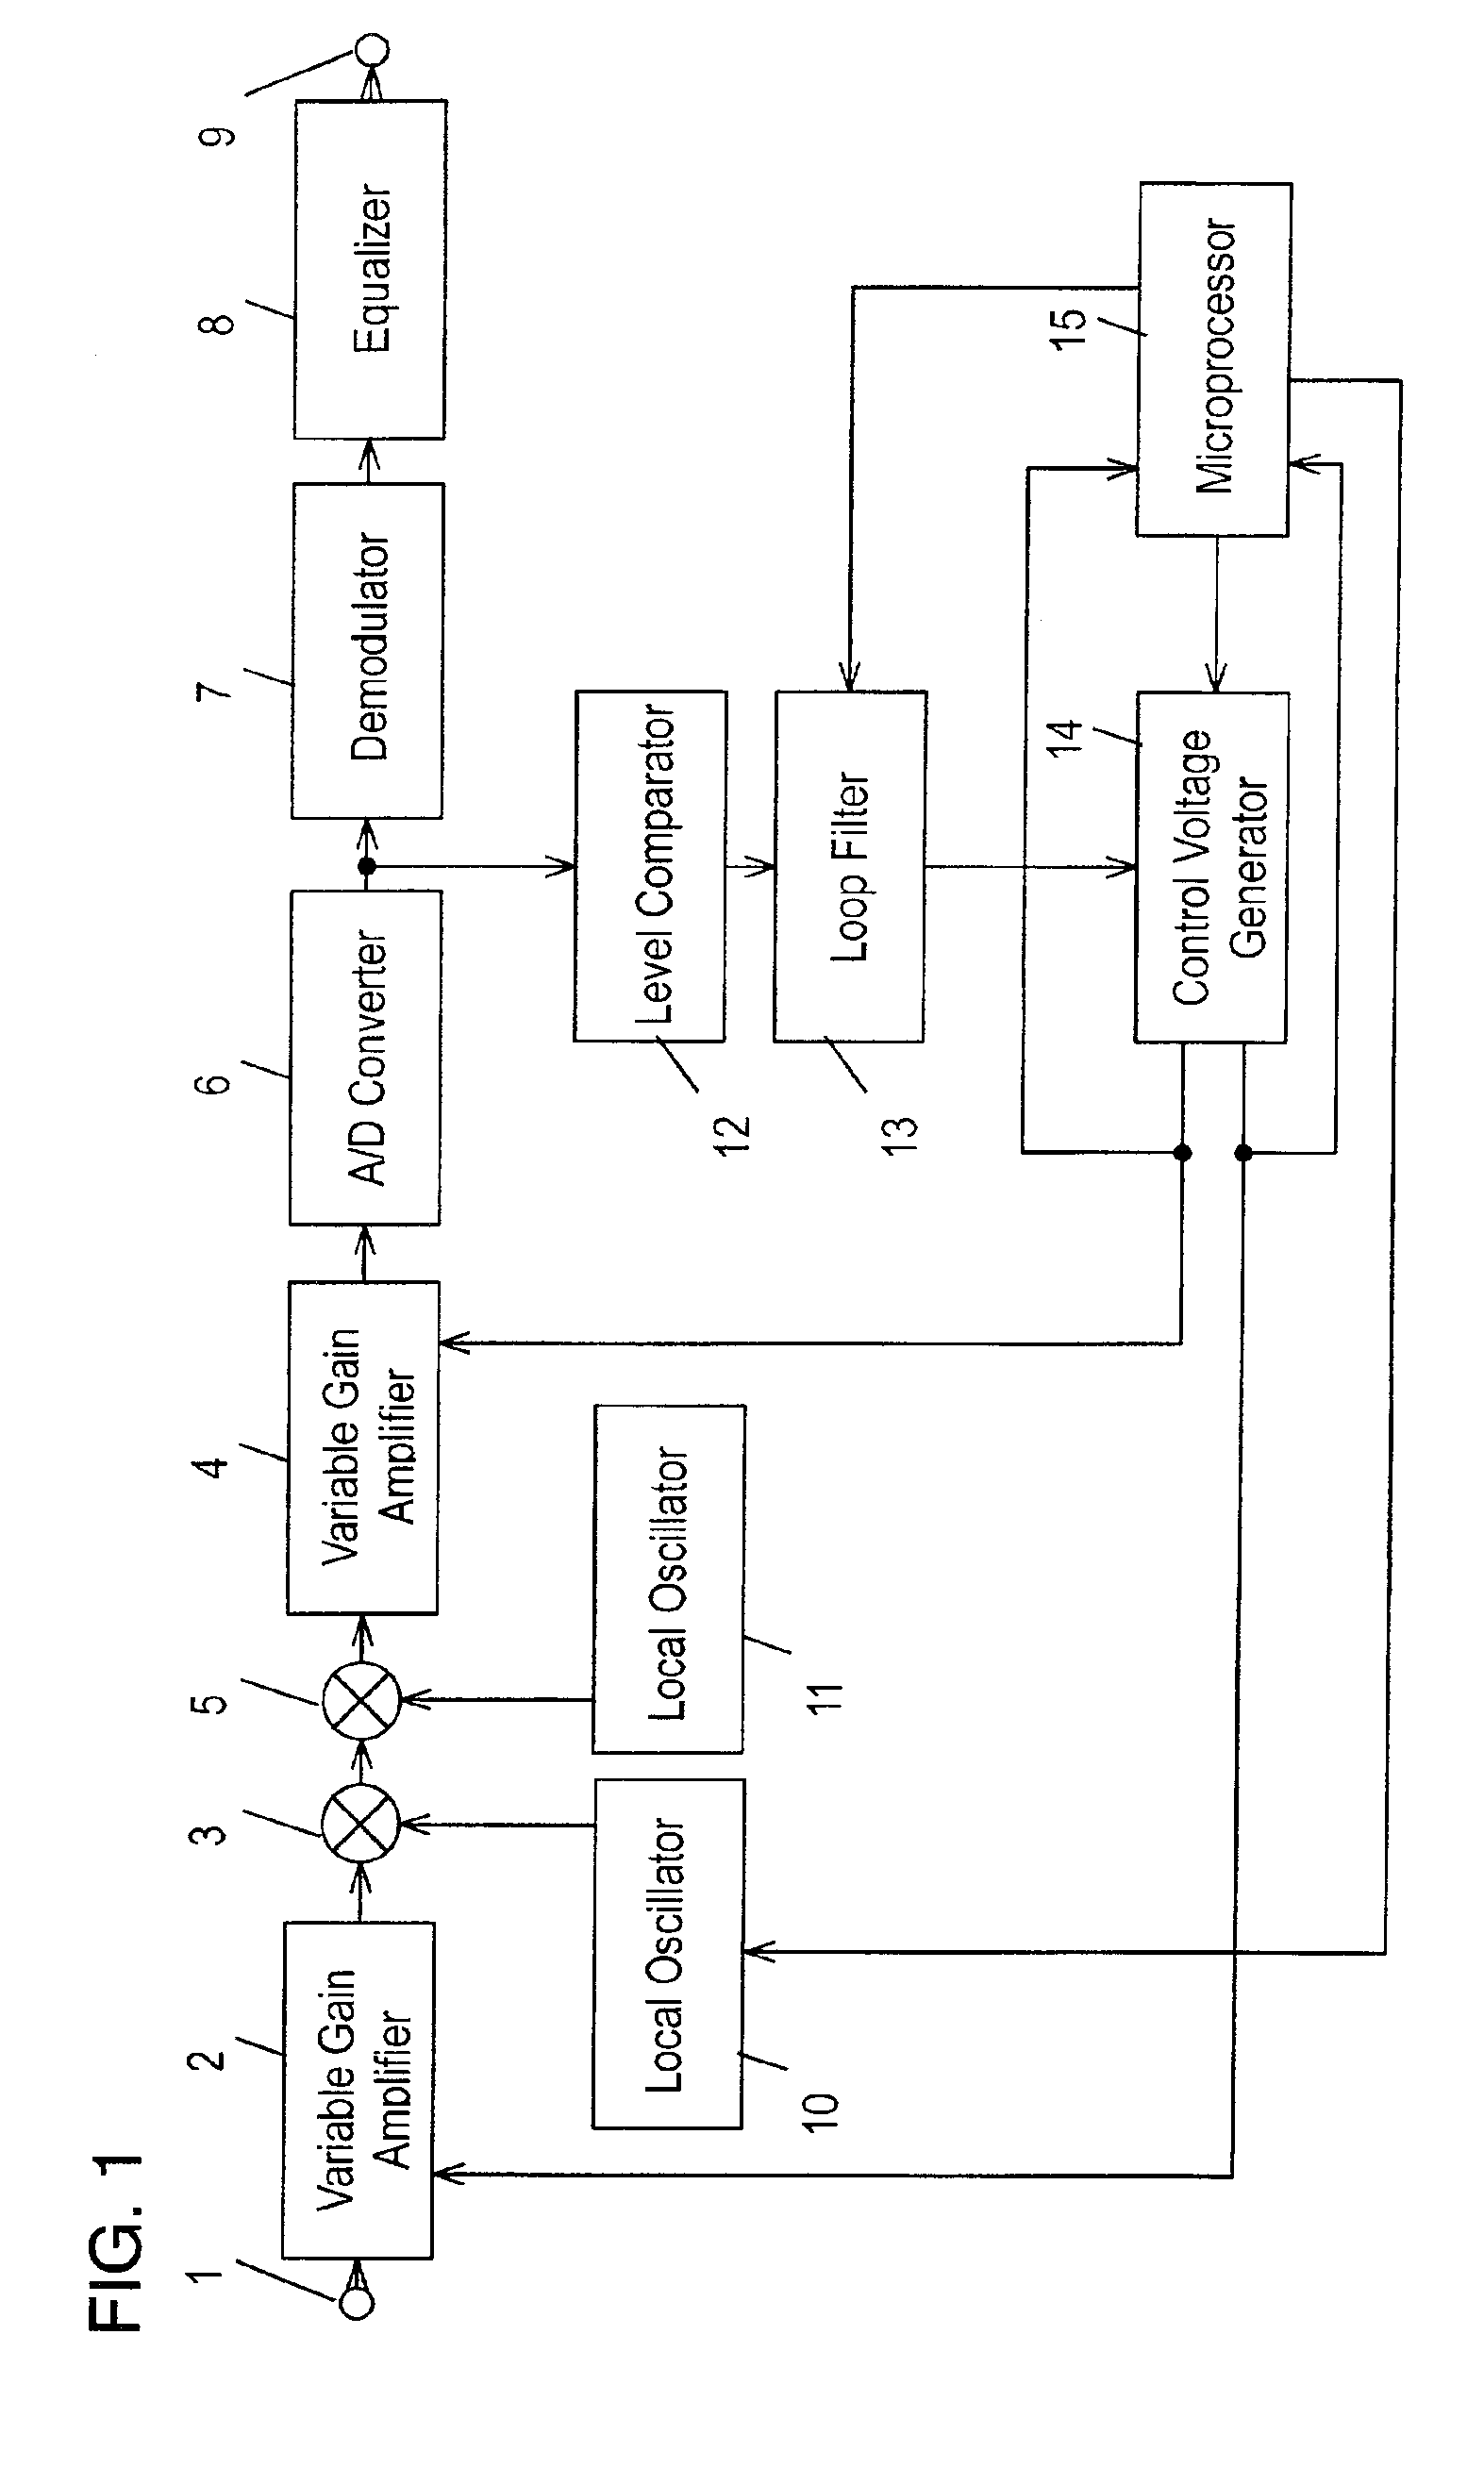 Digital signal receiver